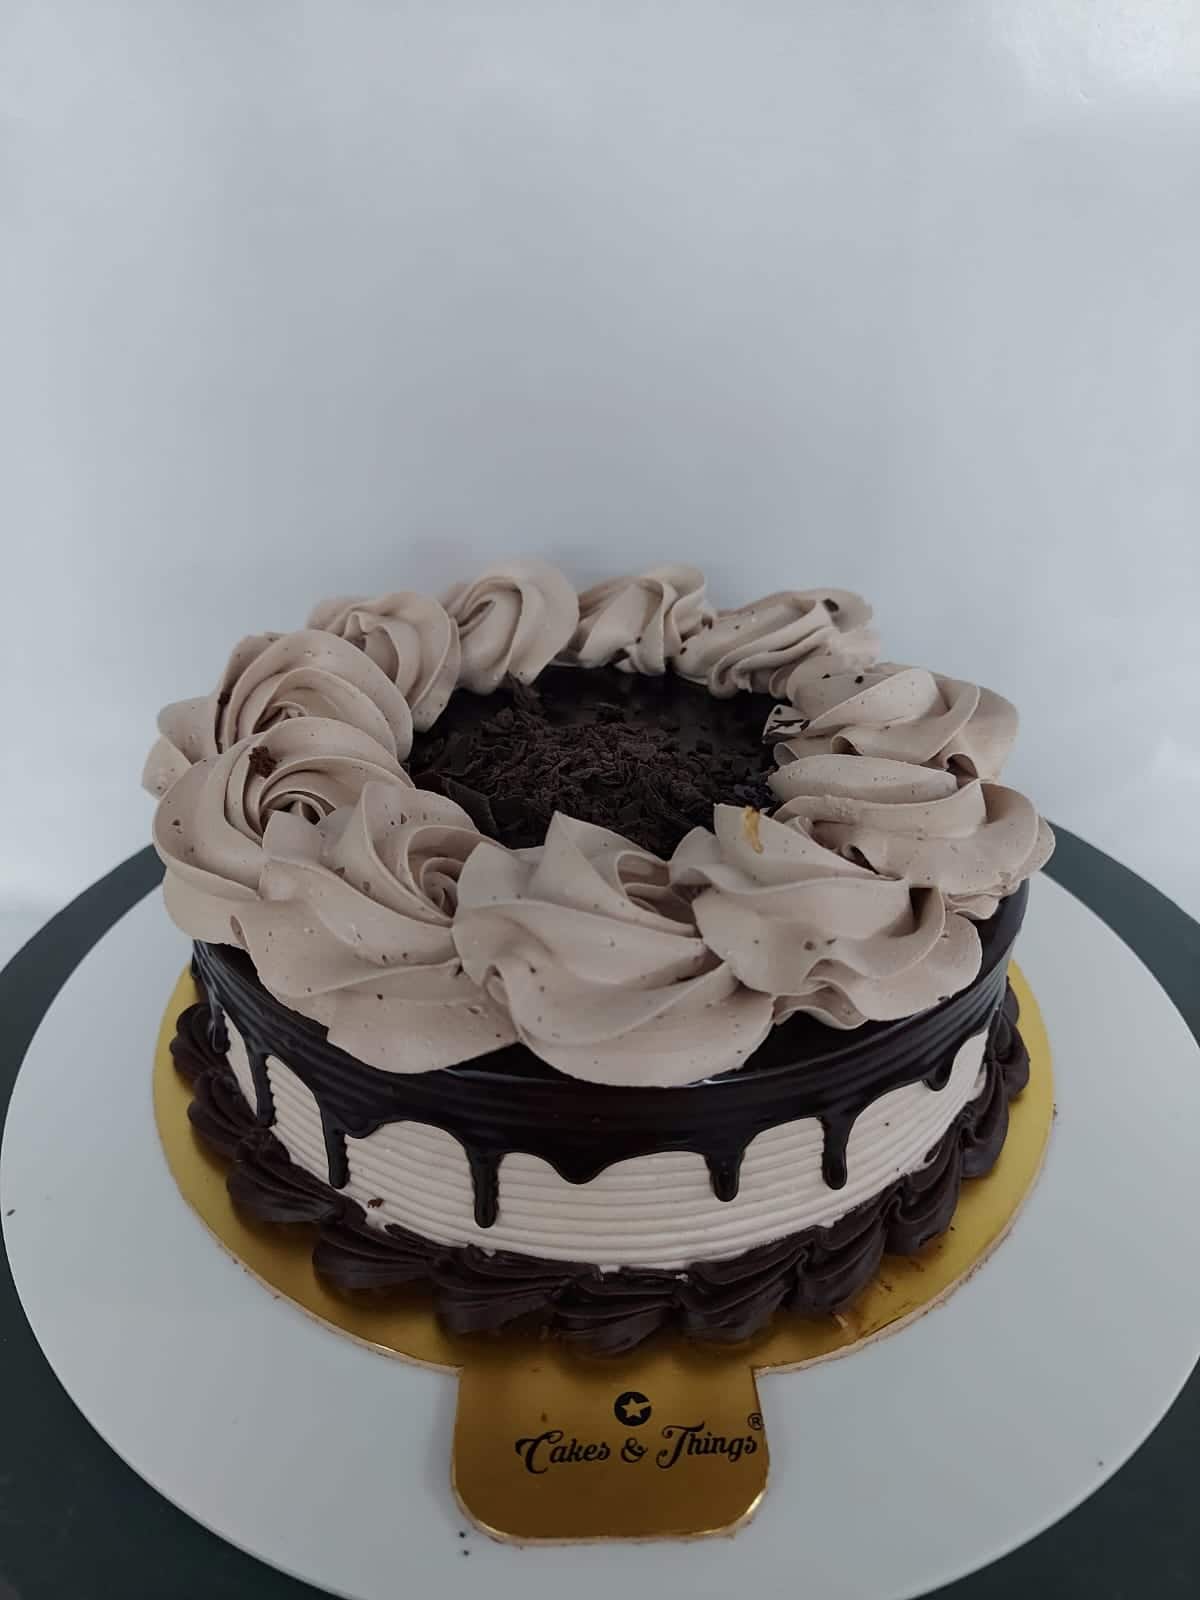 Aparna's Cake & Cookies - Birthday cake.. # order # 7384560870 | Facebook